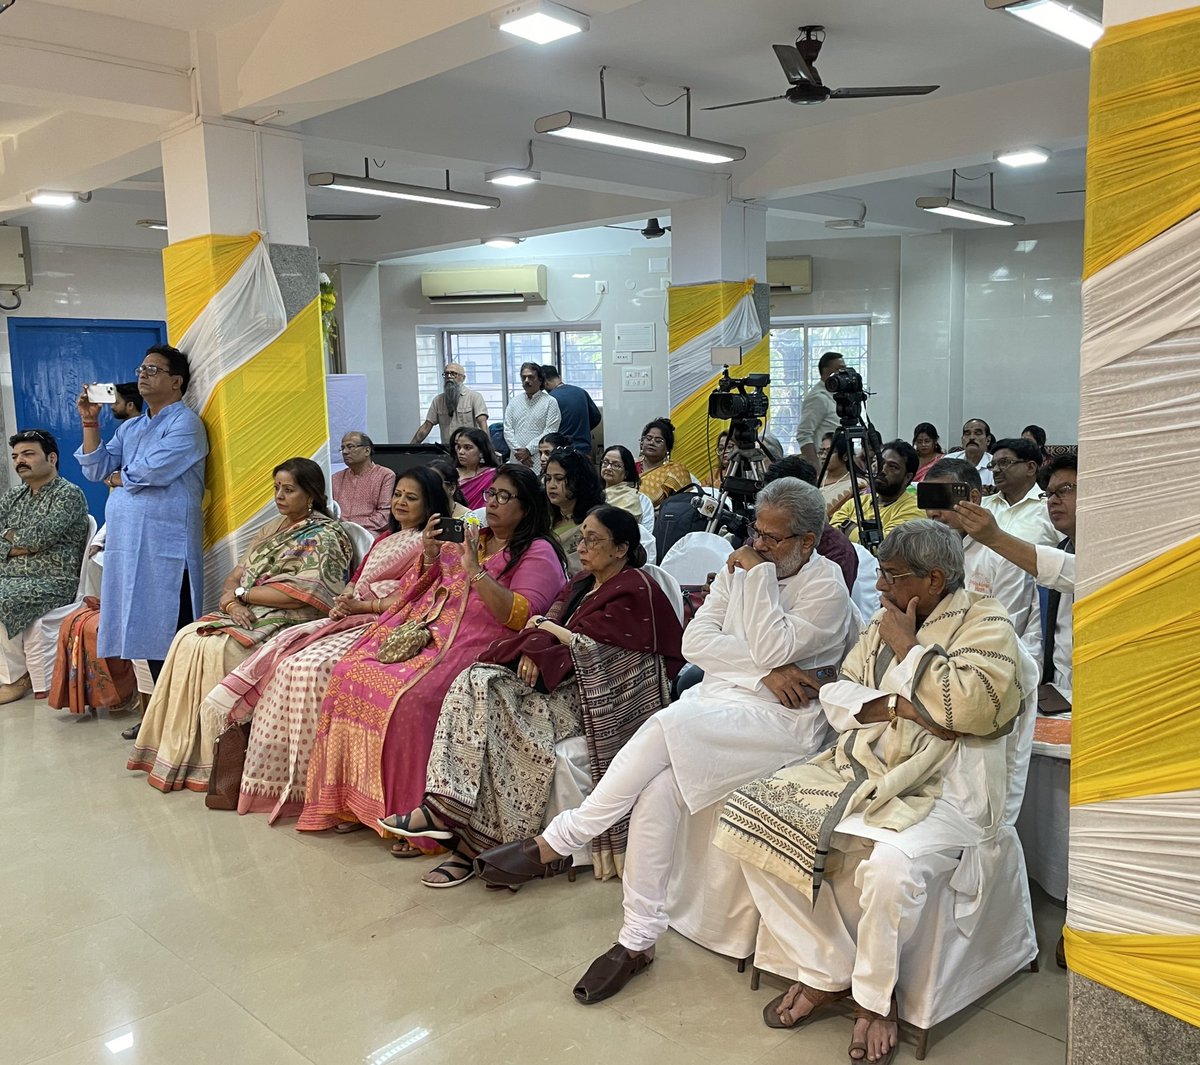 A soulful performance by Padma Shri Recipient, Shubha Mudgal accompanied by Aneesh Pradhan on tabla and Sudhir Nayak on harmonium today at Foundation’s Saraswati Puja celebrations. @smudgal @ehsaaswomen @VarmaMalika @DattaSangeeta @GouriBasu @SoumitraMitraO1 @Anindita0909